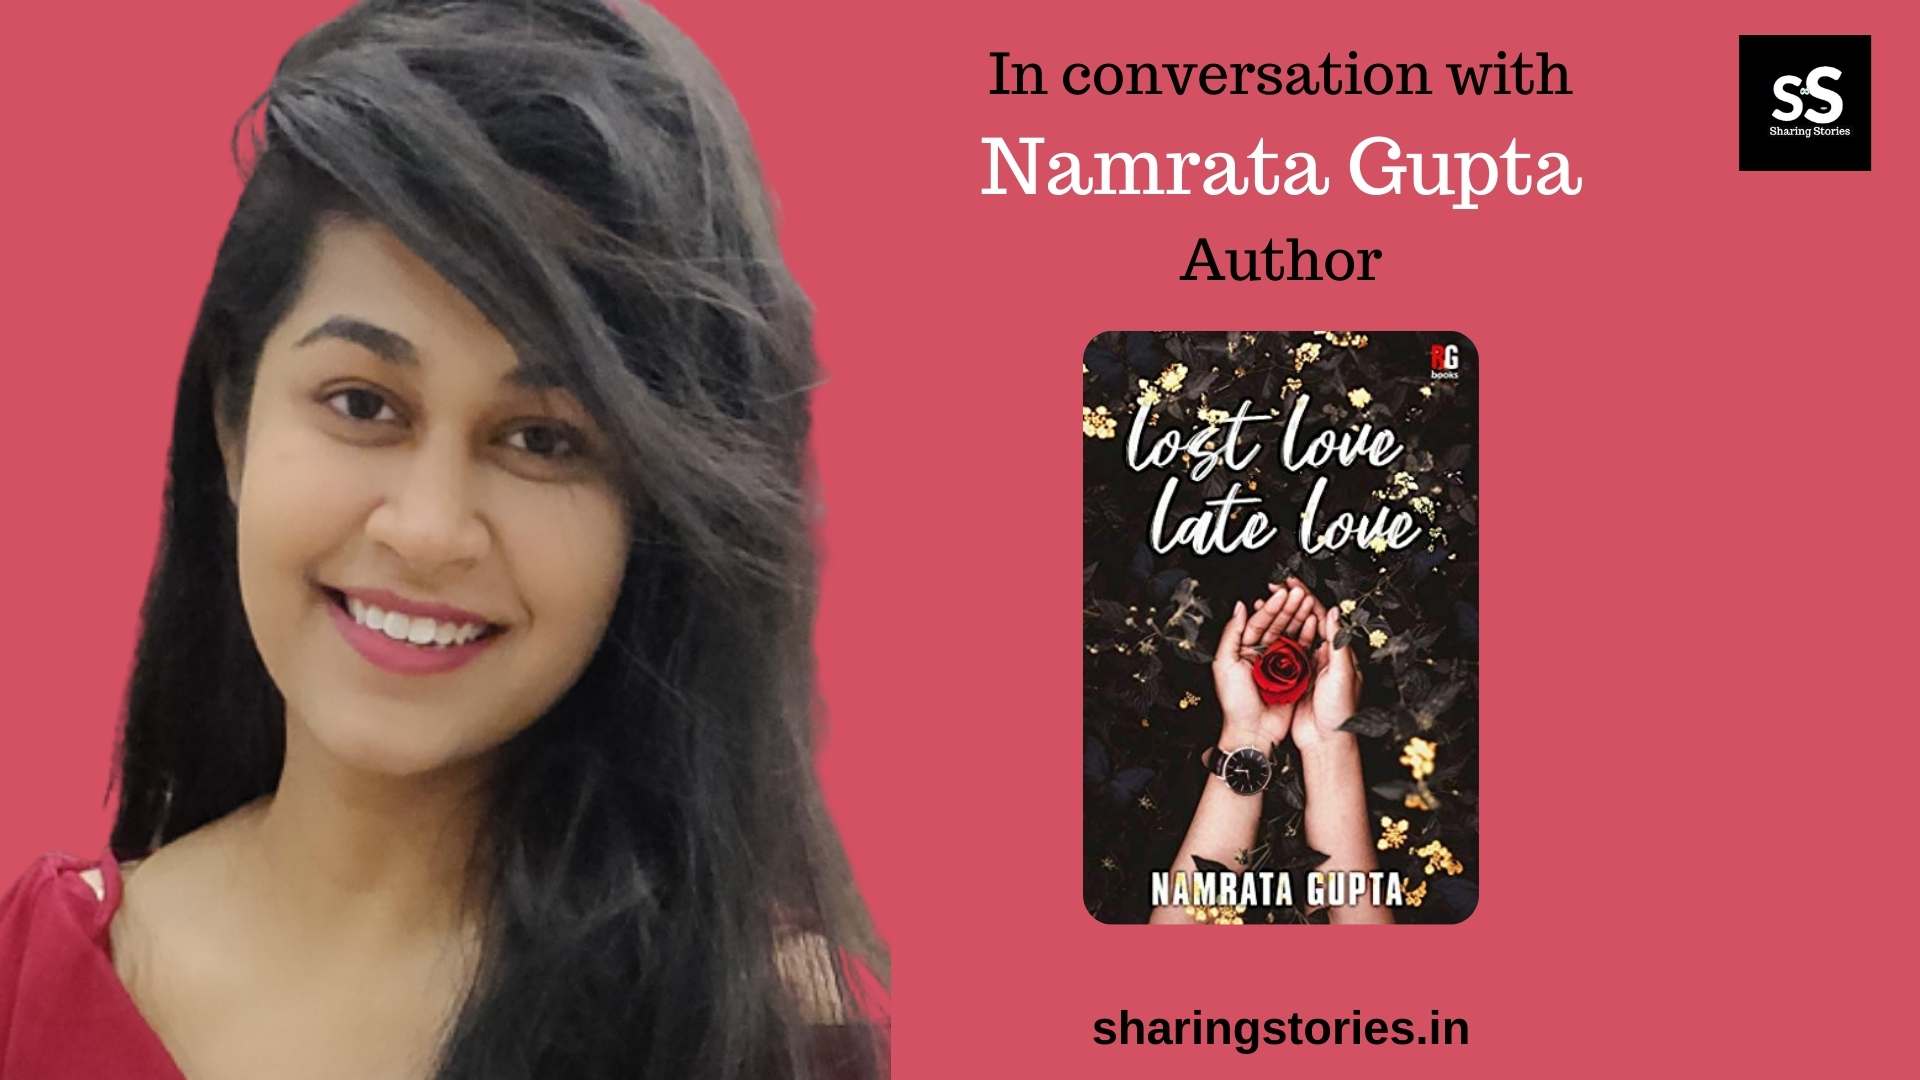 Author Namrata Gupta